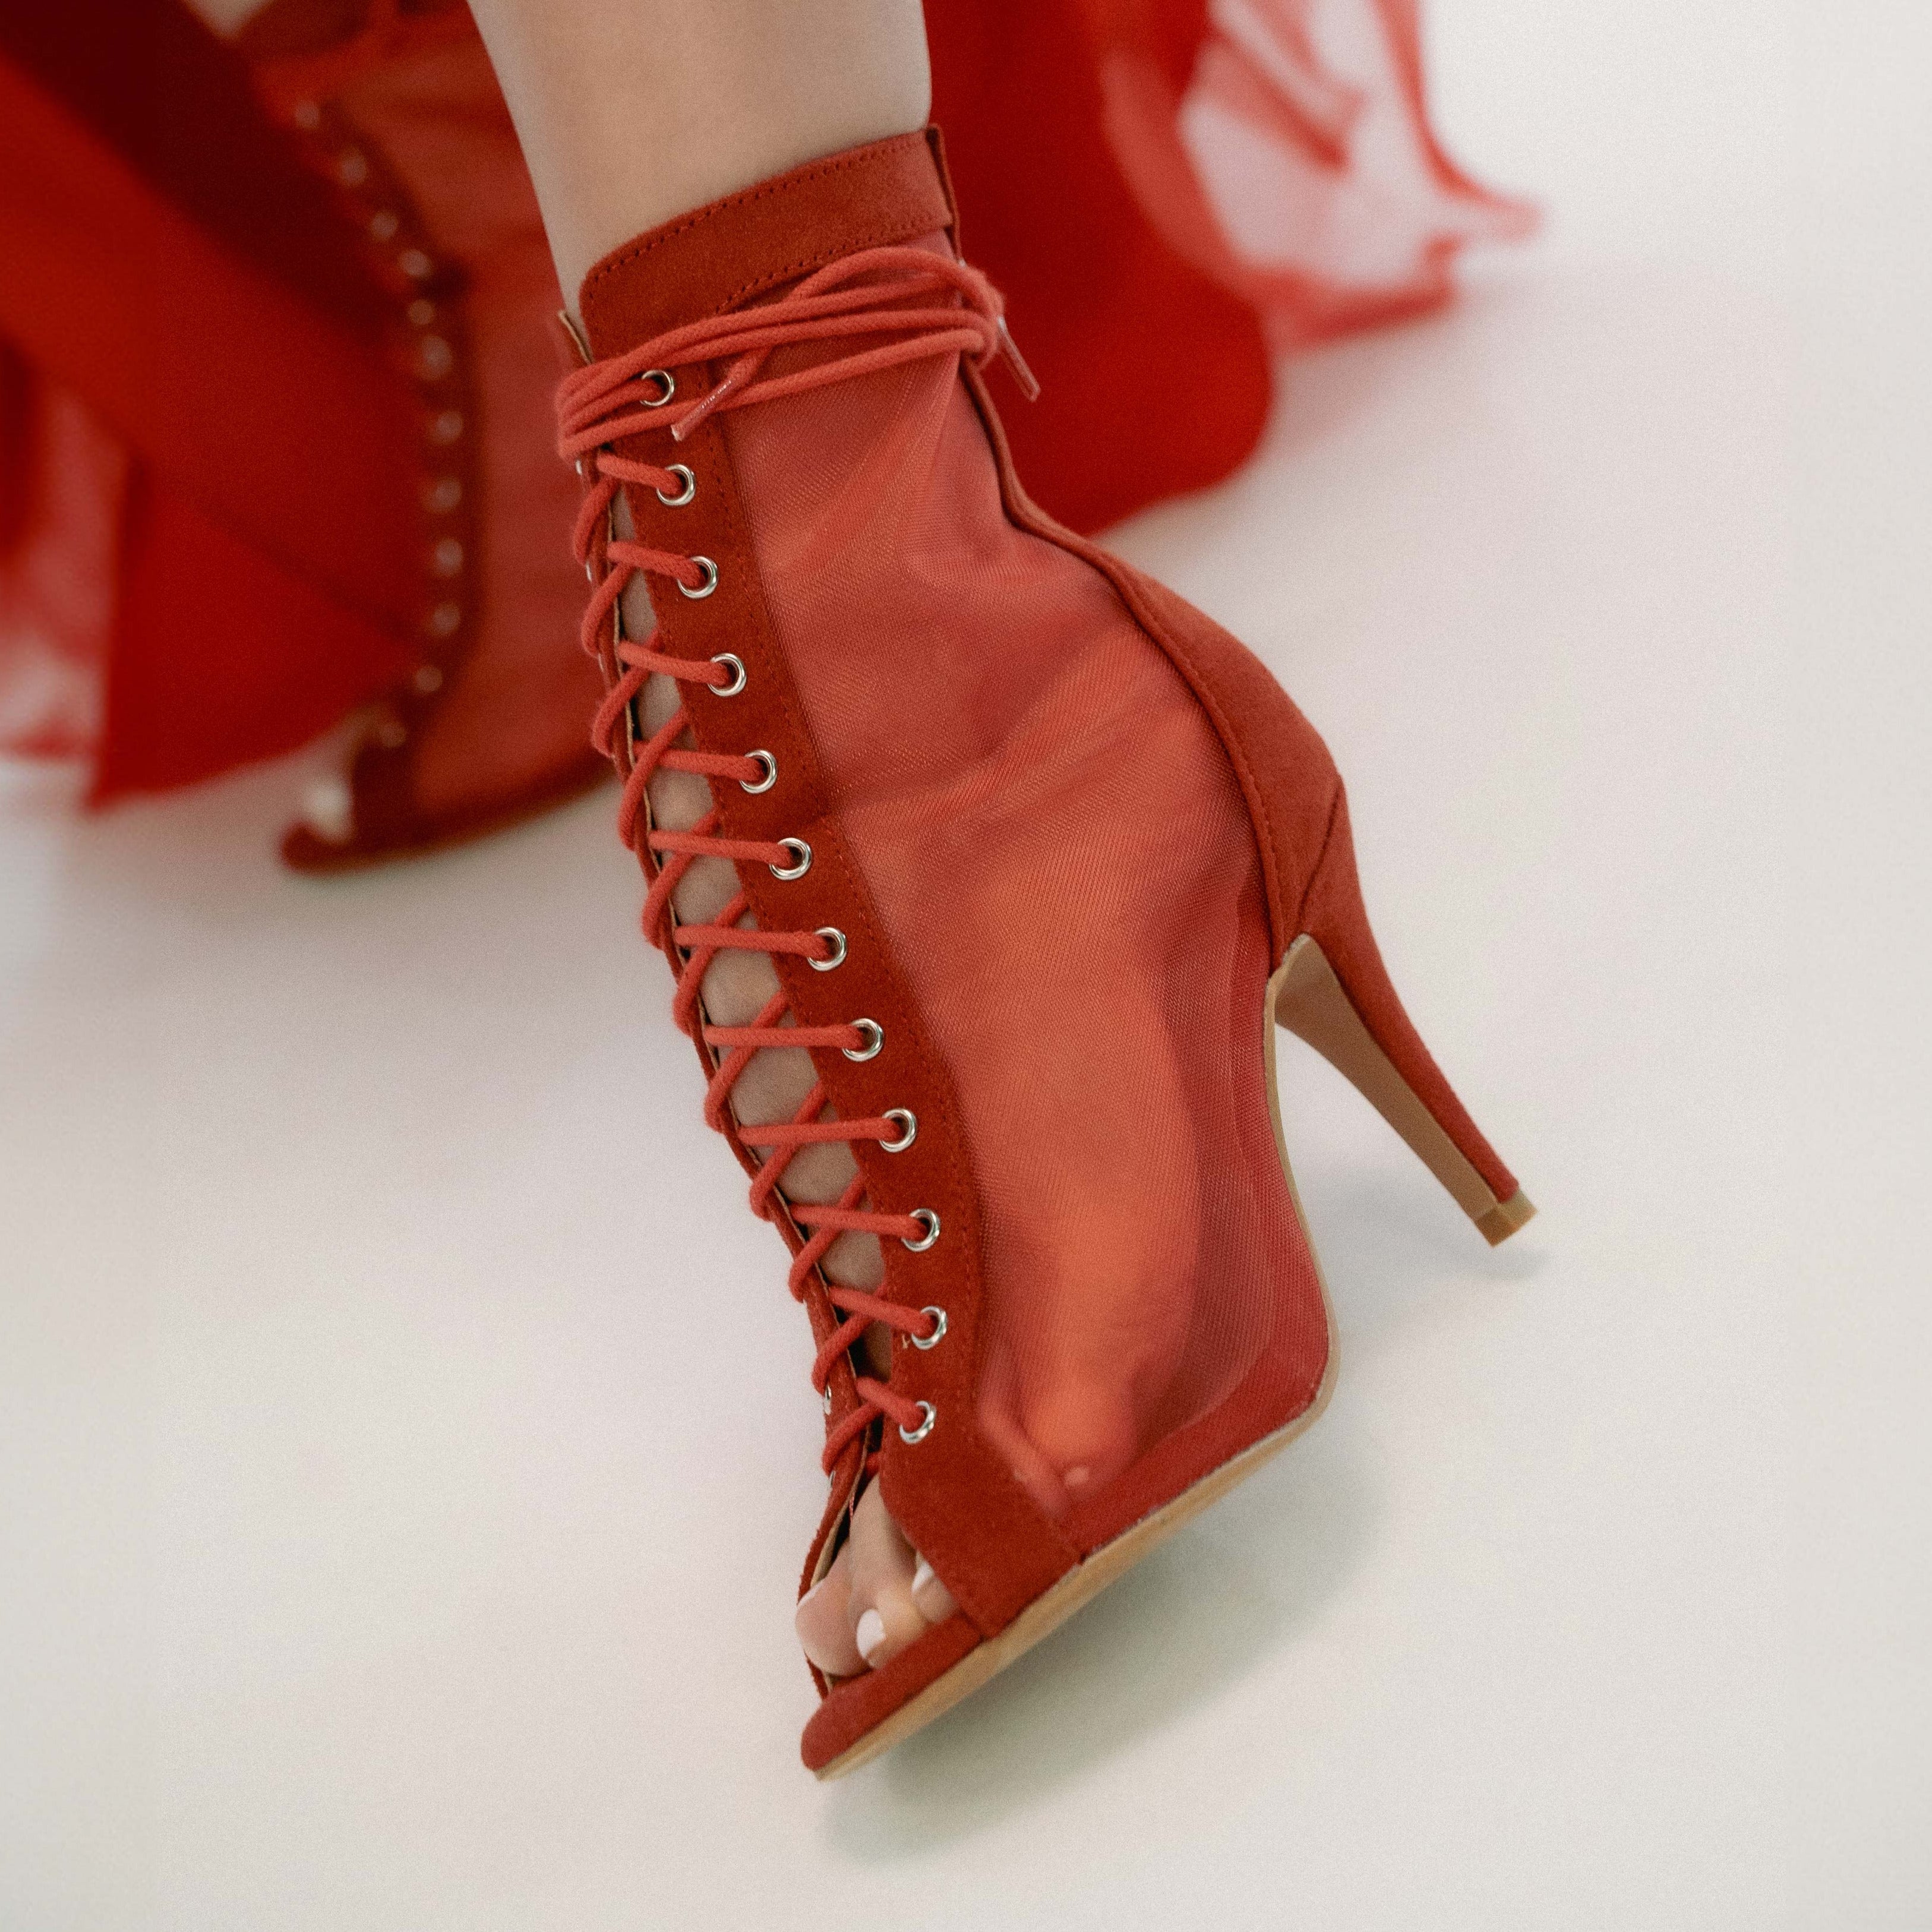 Red Boots by Sara Panero